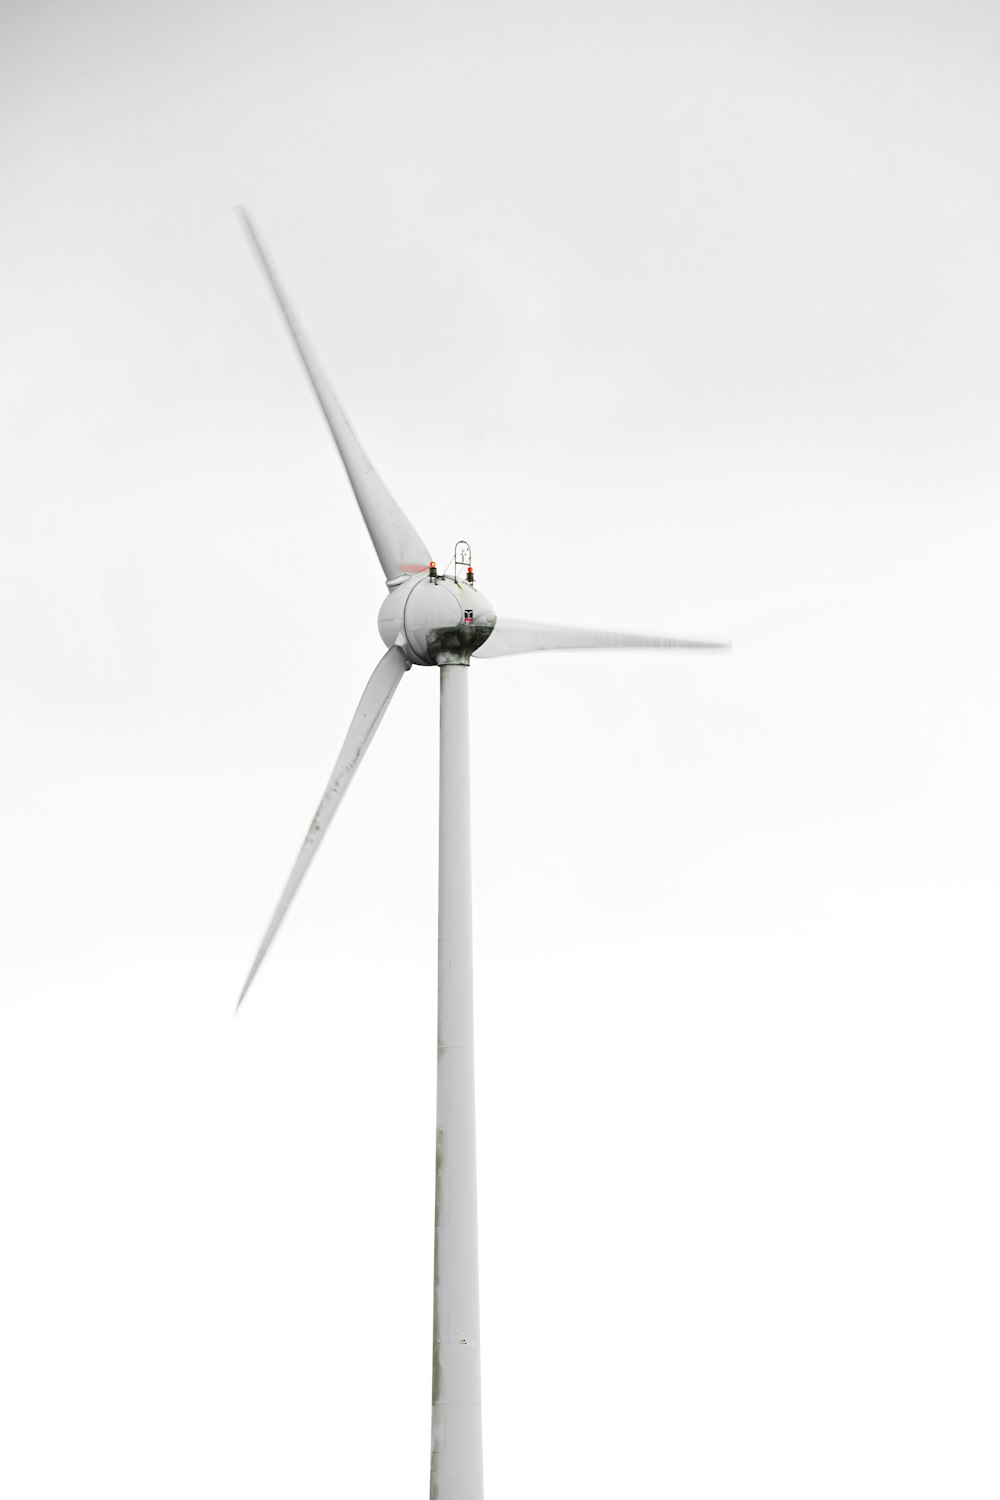 white wind turbine under white sky photo – Free Terceira Image on Unsplash